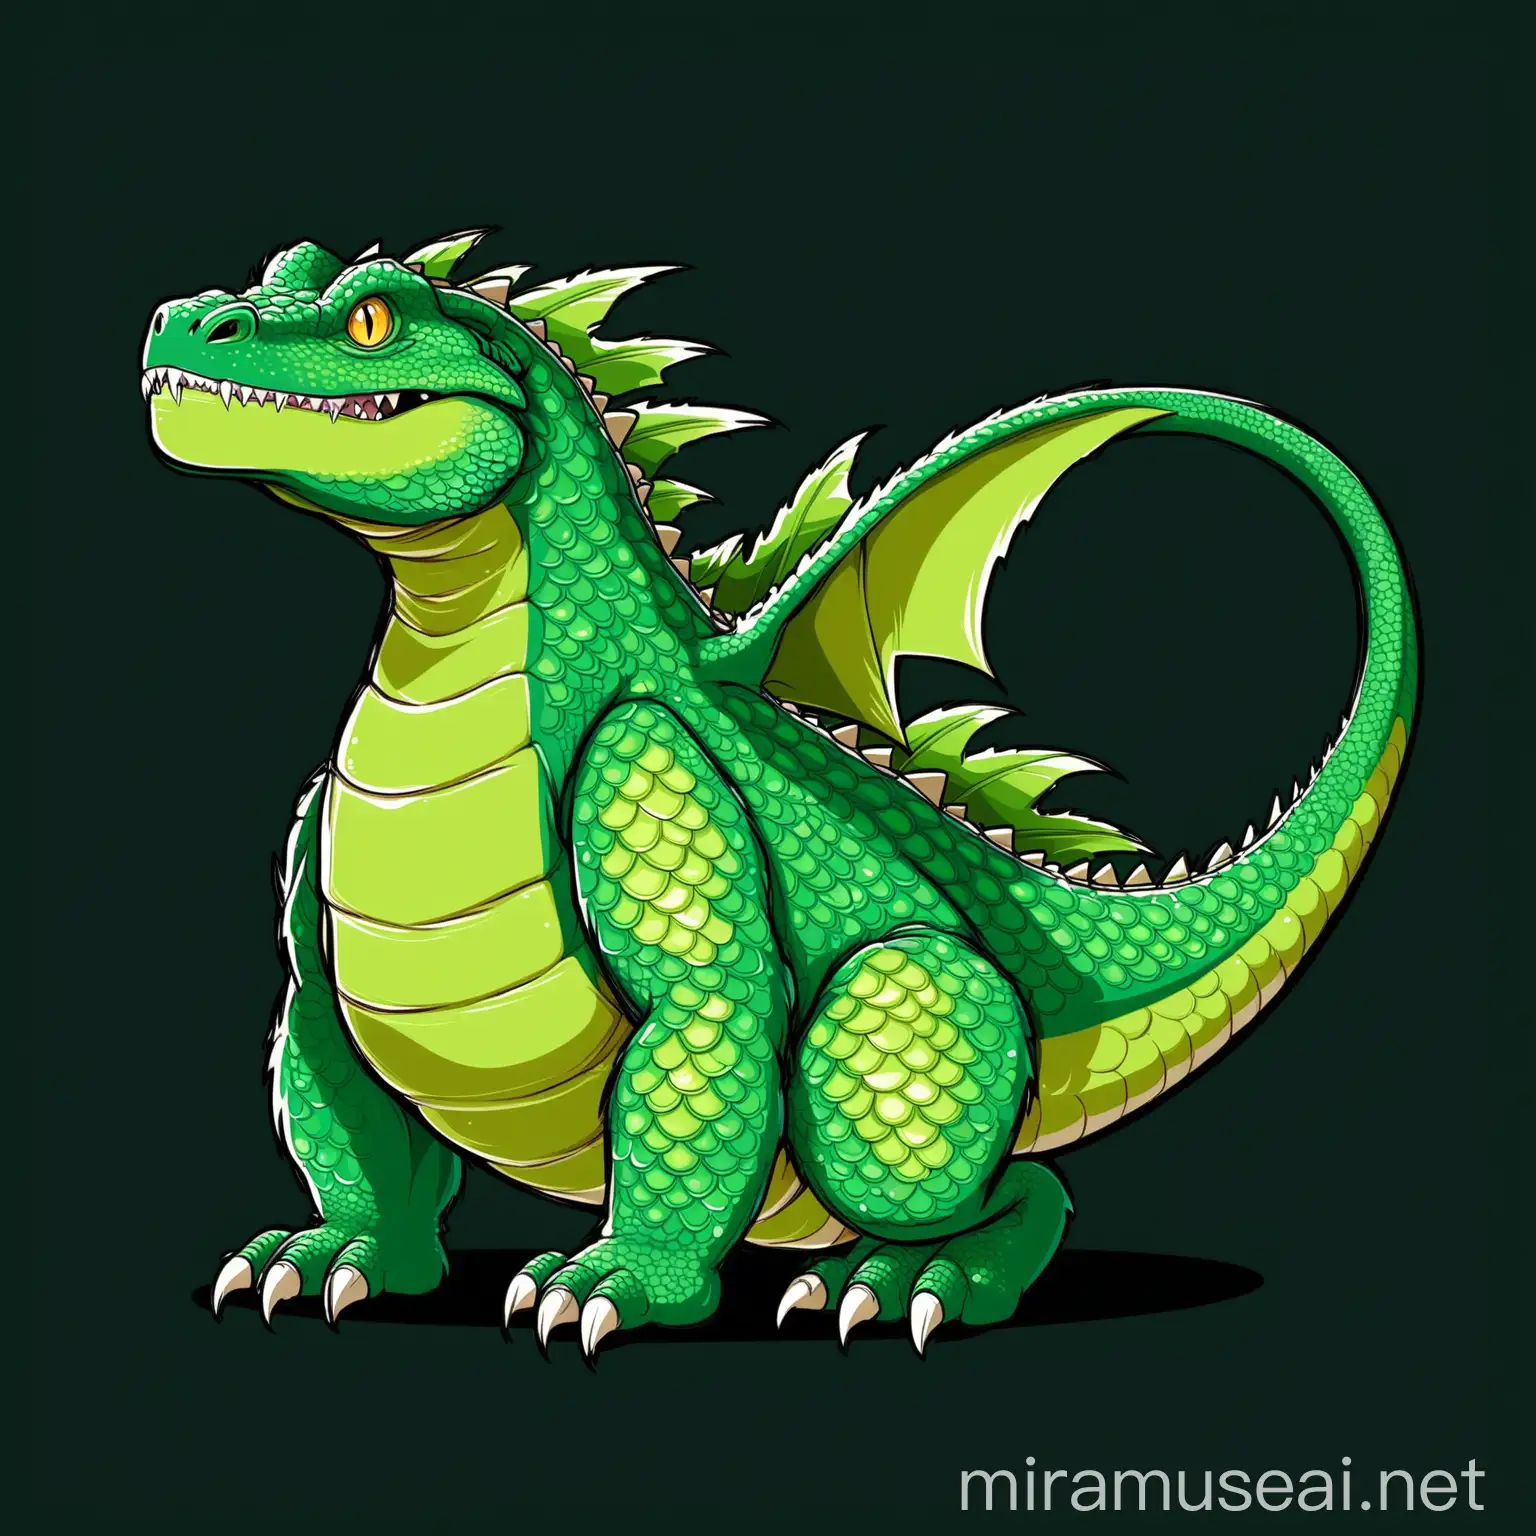 Cartoon Green Lizard Monster on Black Background